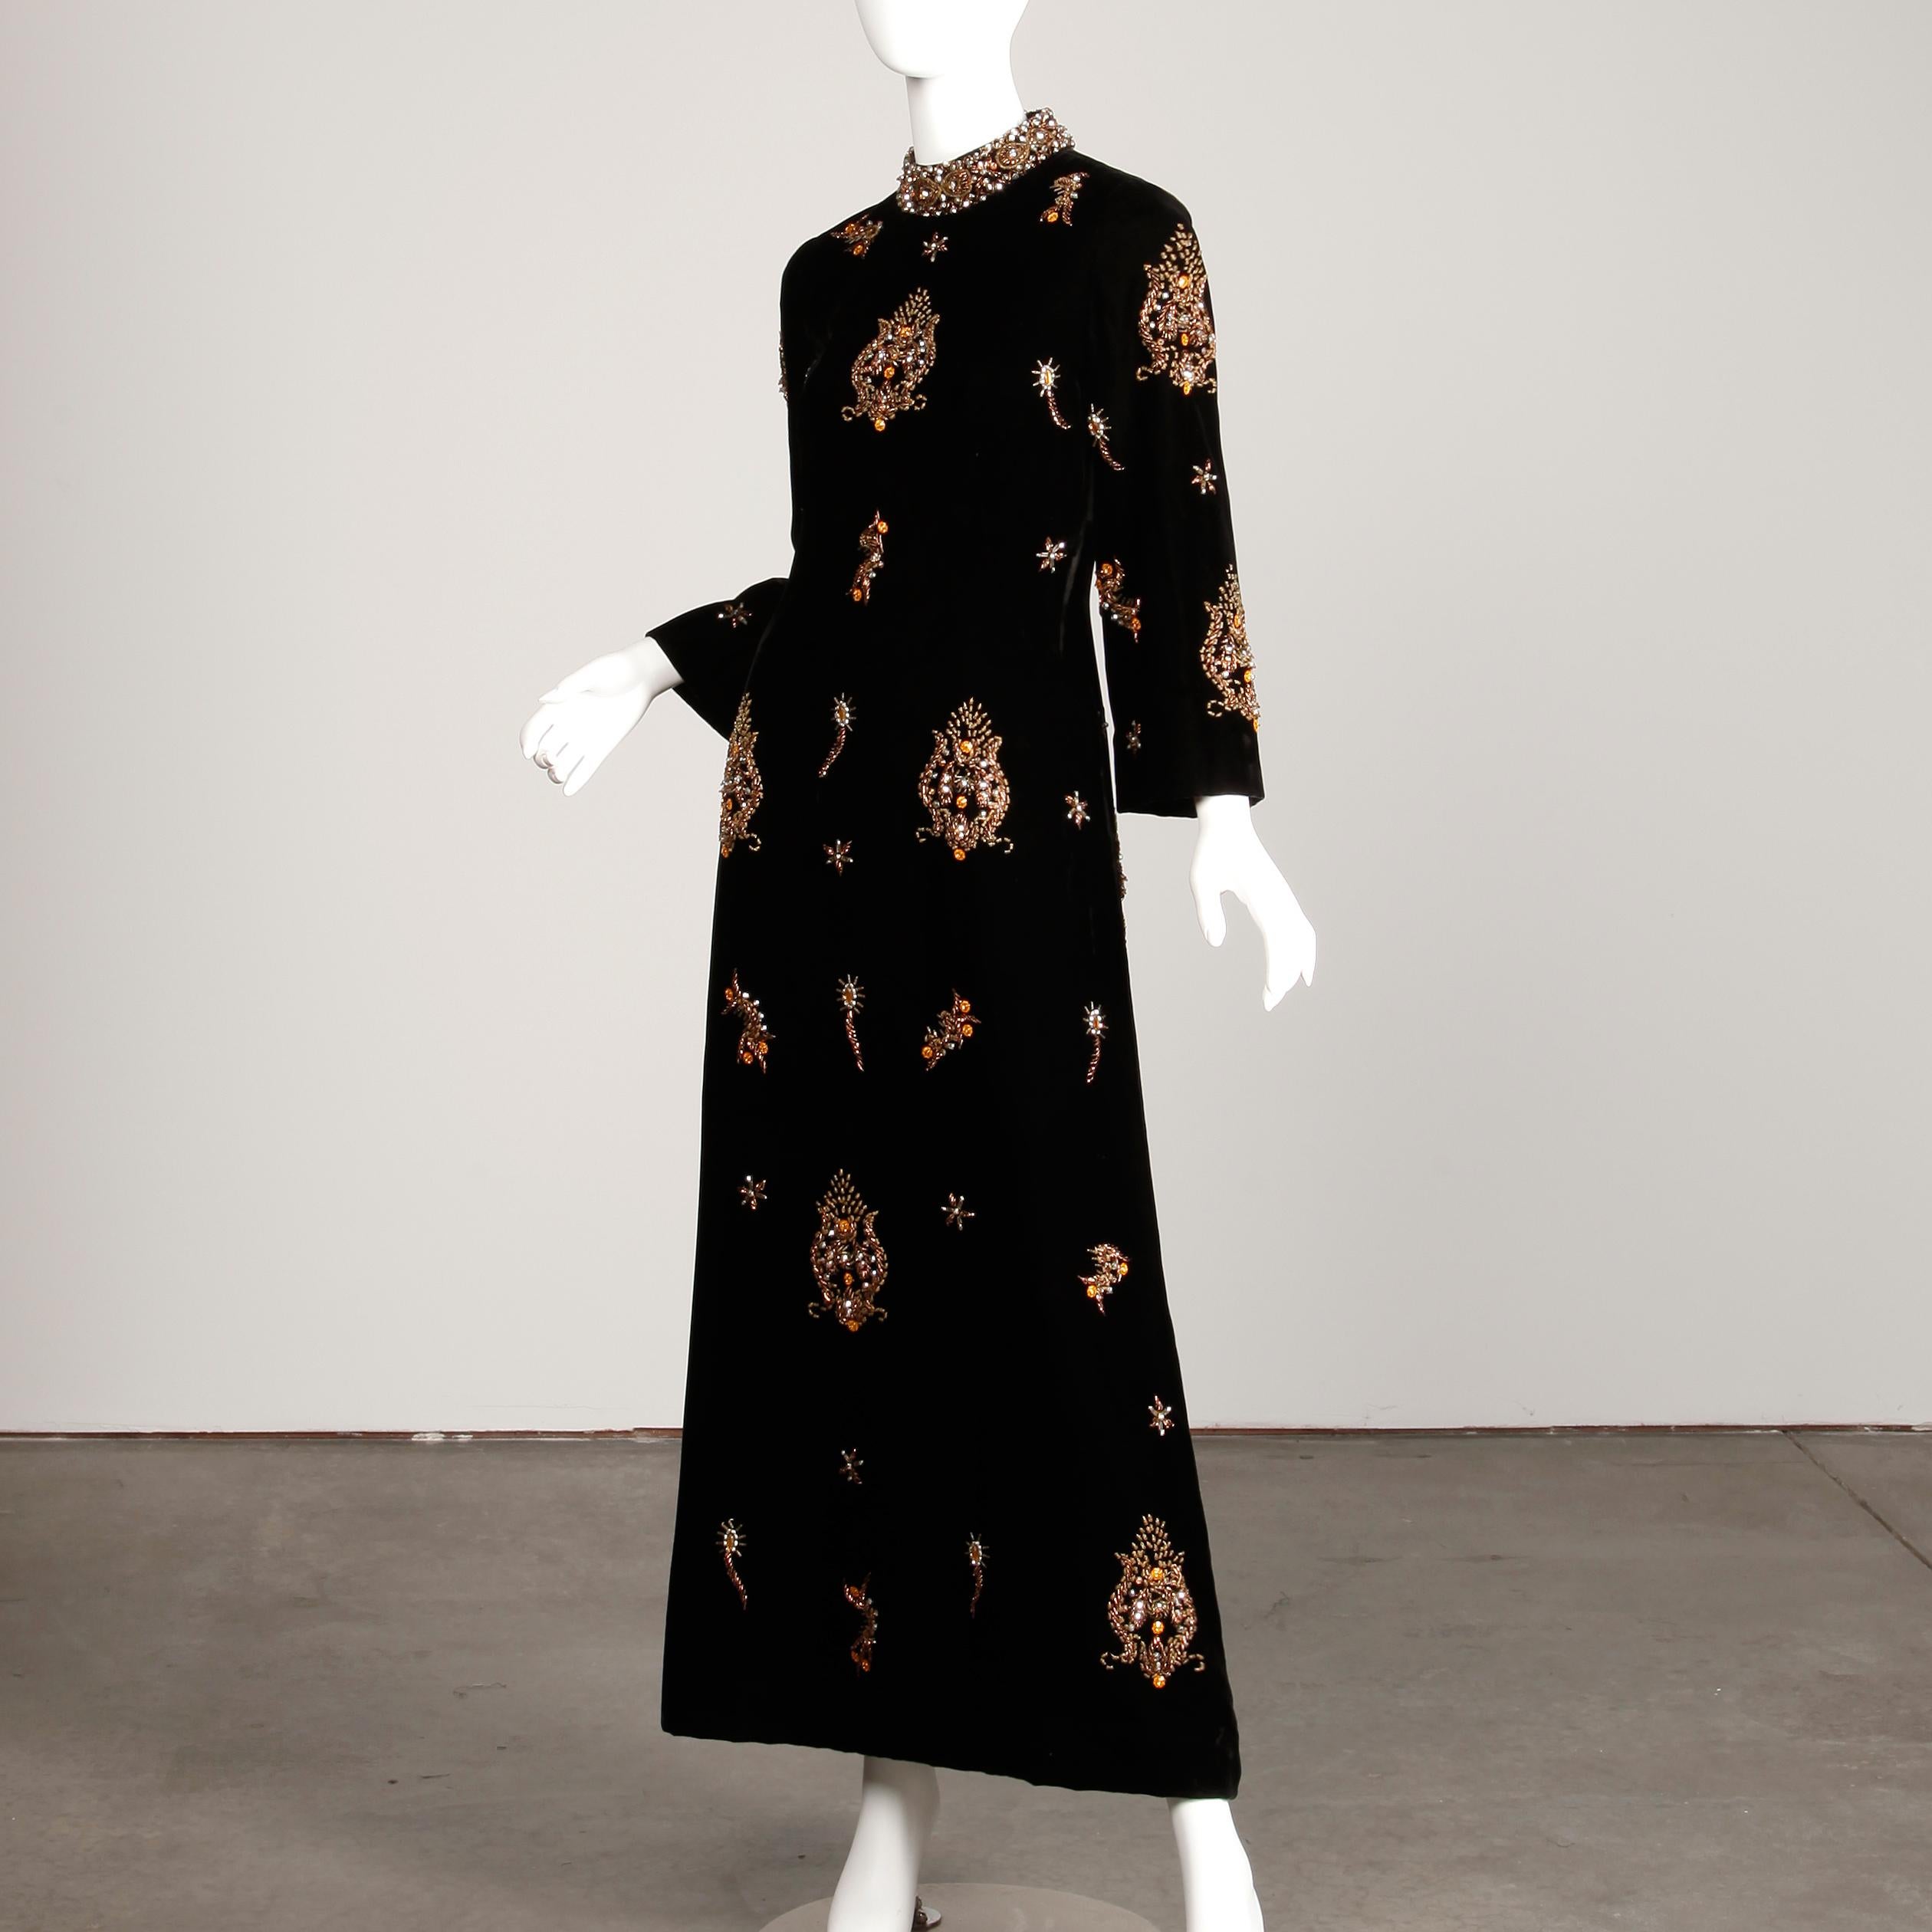 1960s Vintage Black Velvet Evening Gown Dress with Metallic Beaded Embellishment 1